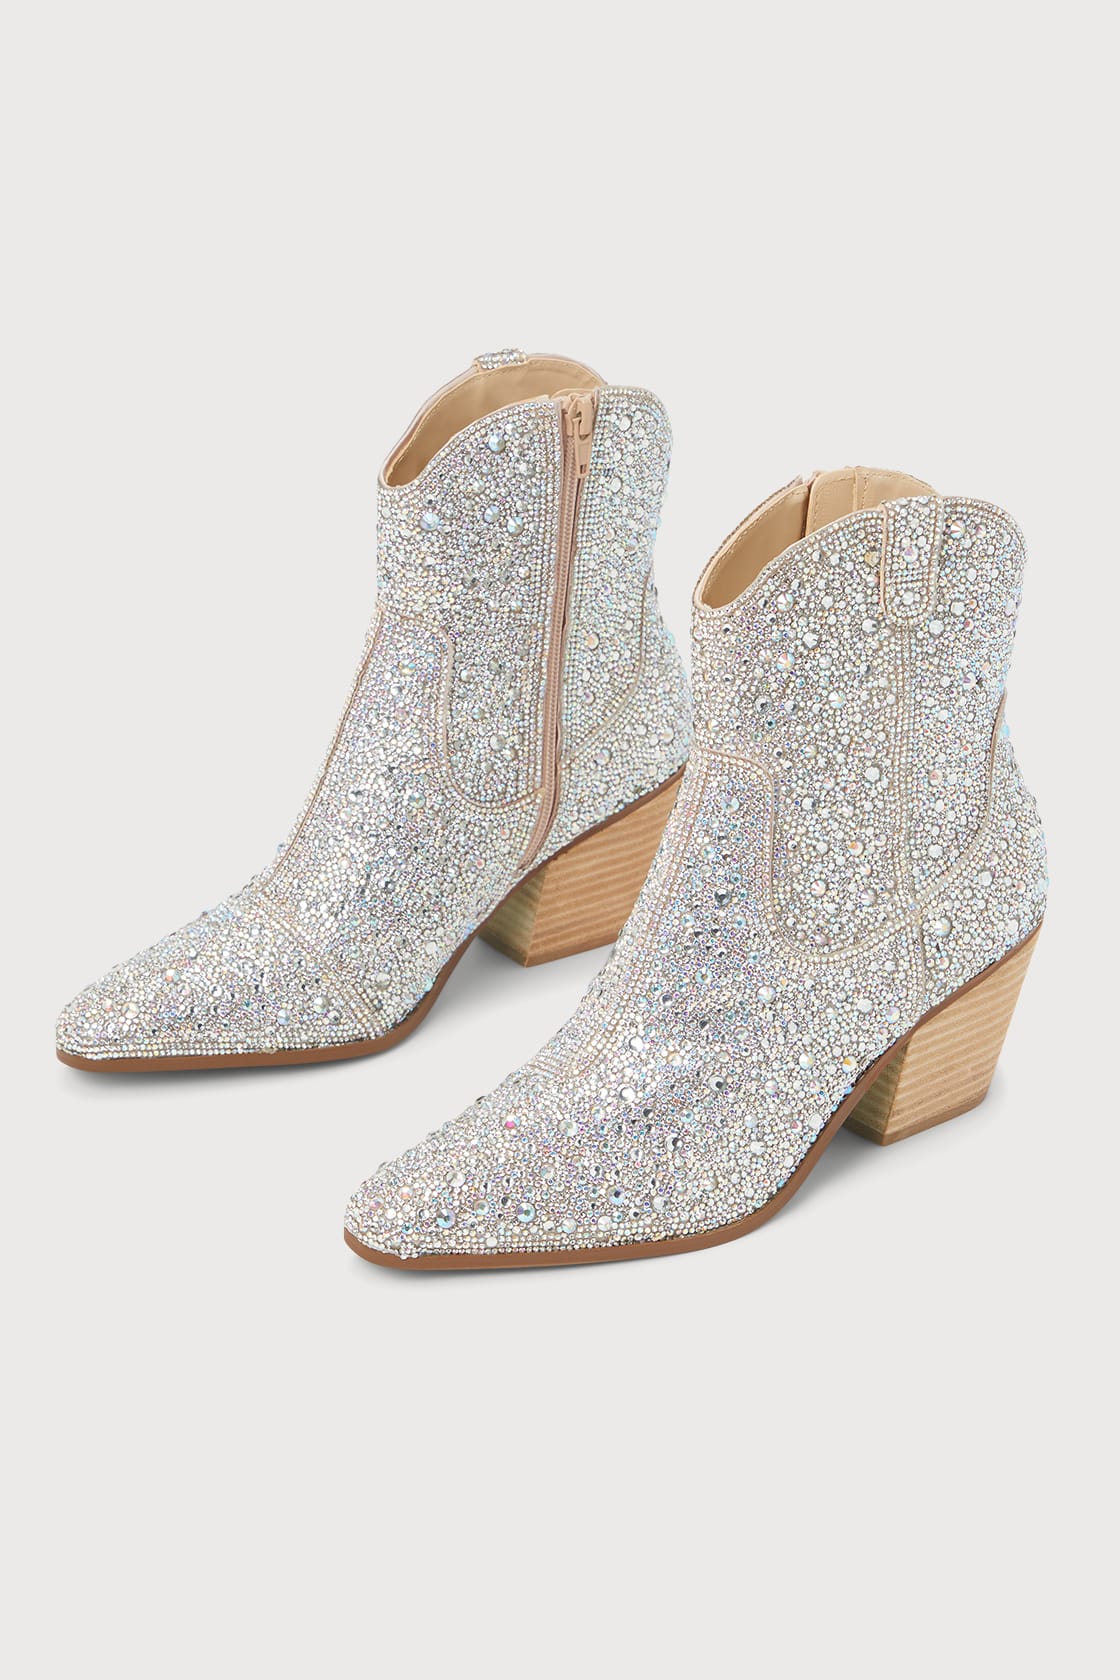 Betsey Johnson SB-Diva - Rhinestone Boots - Silver Ankle Boots - Lulus